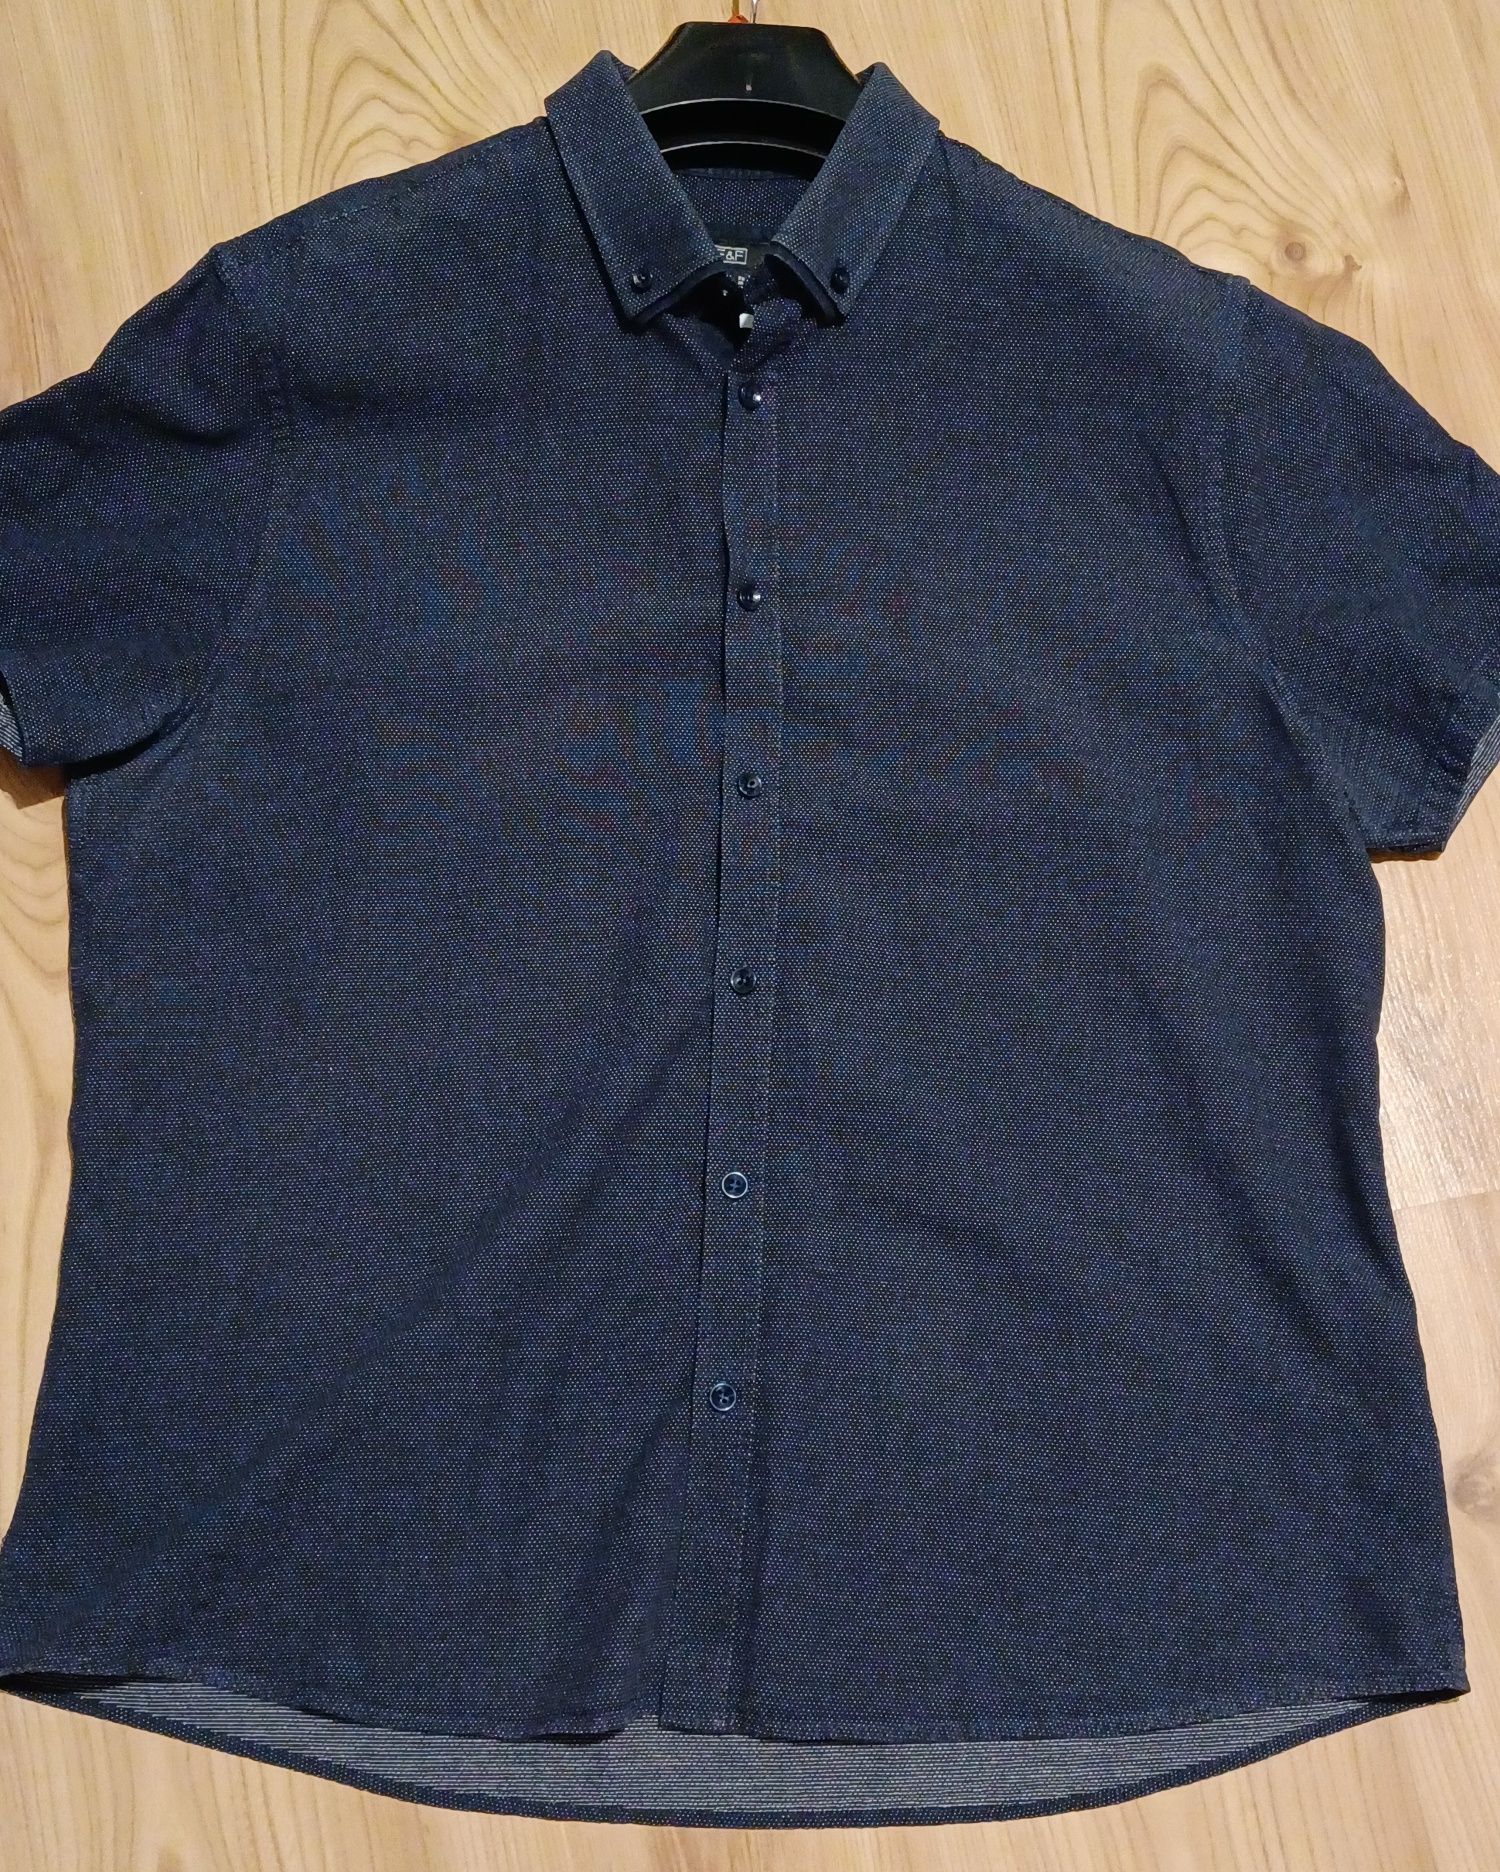 Granatowa koszula z krótkim rękawem męska rozmiar XL F&F Stan bdb